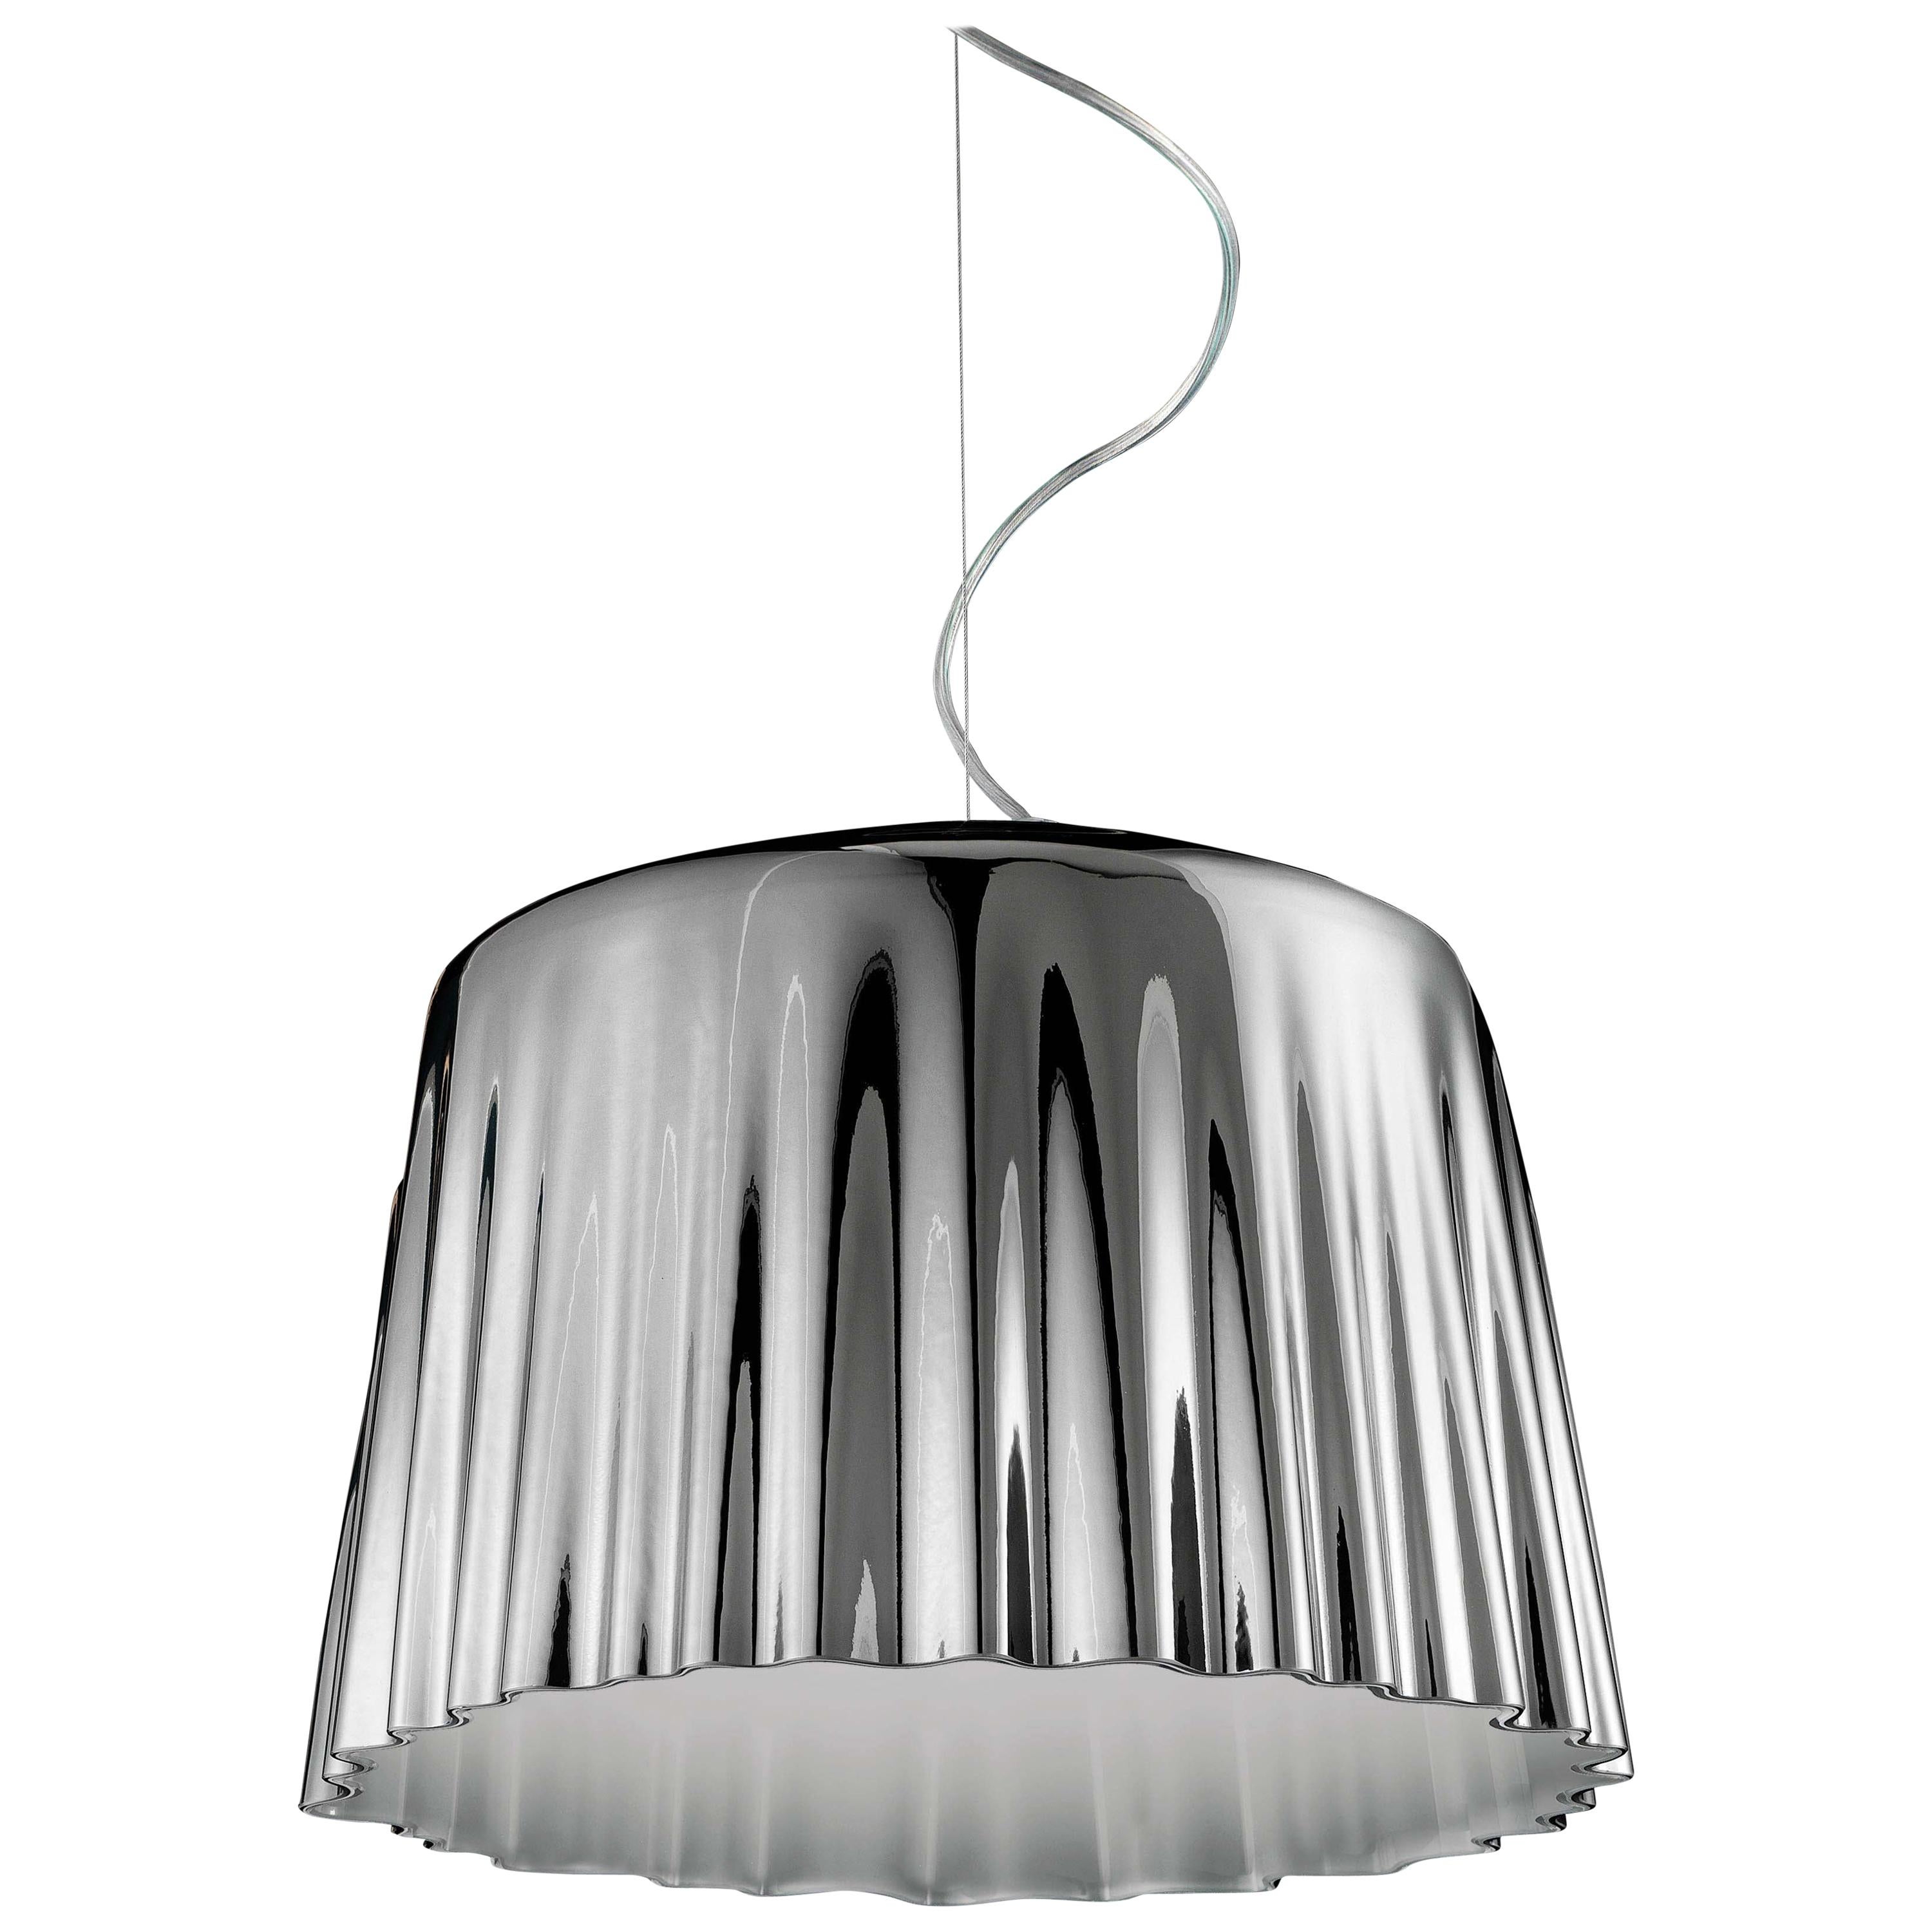 For Sale: Gray (White and Metallized) Vistosi LED Cloth Suspension Light by Romani Saccani Architetti Associati